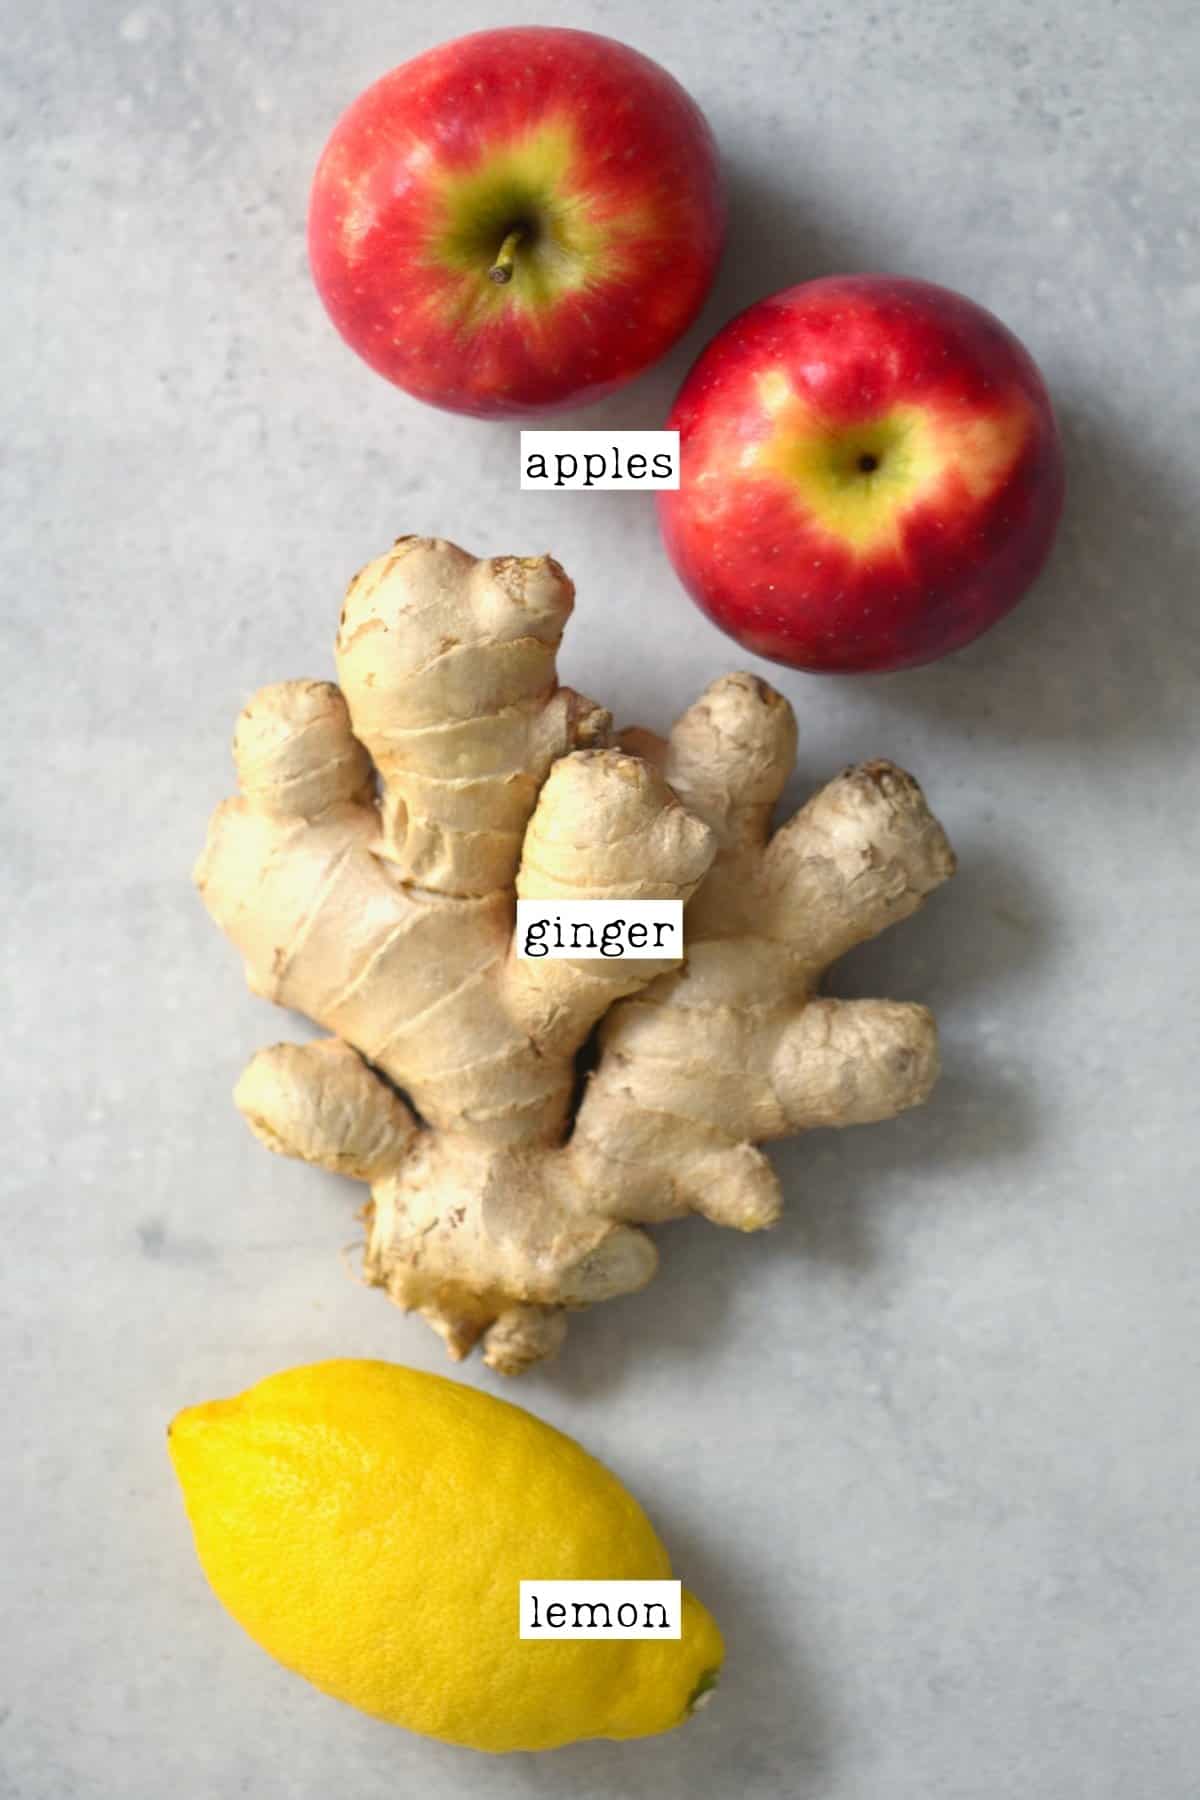 Ingredients for ginger shots